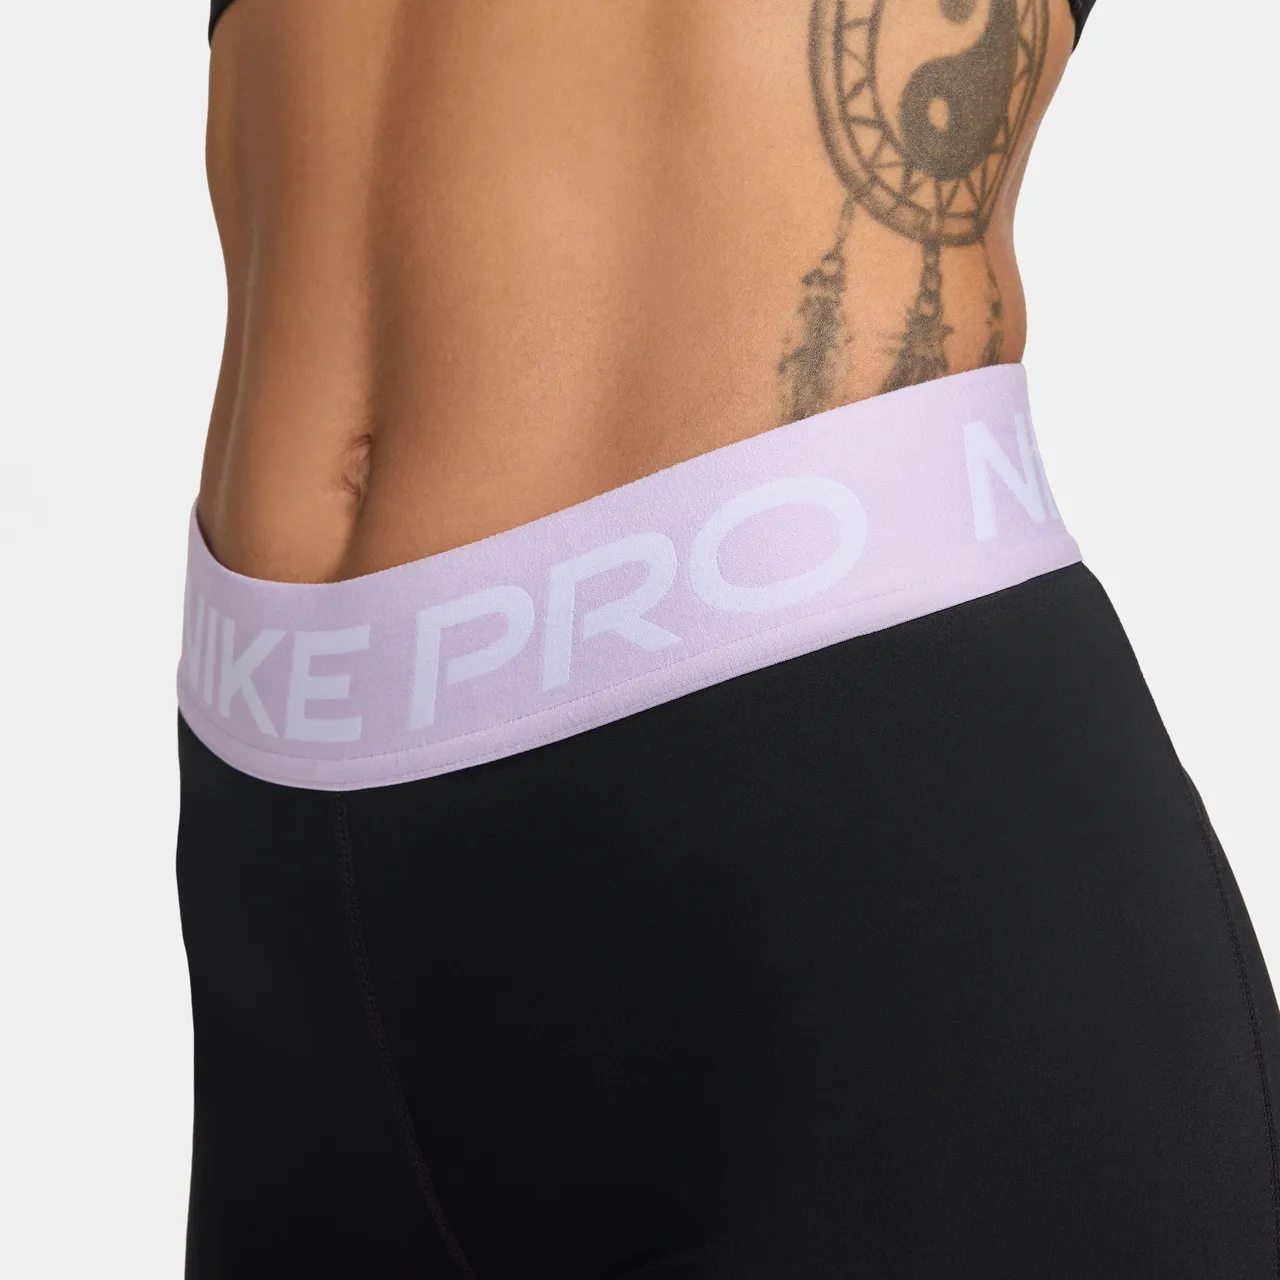 Nike Pro Women's 8cm (approx.) Shorts - Black - Polyester